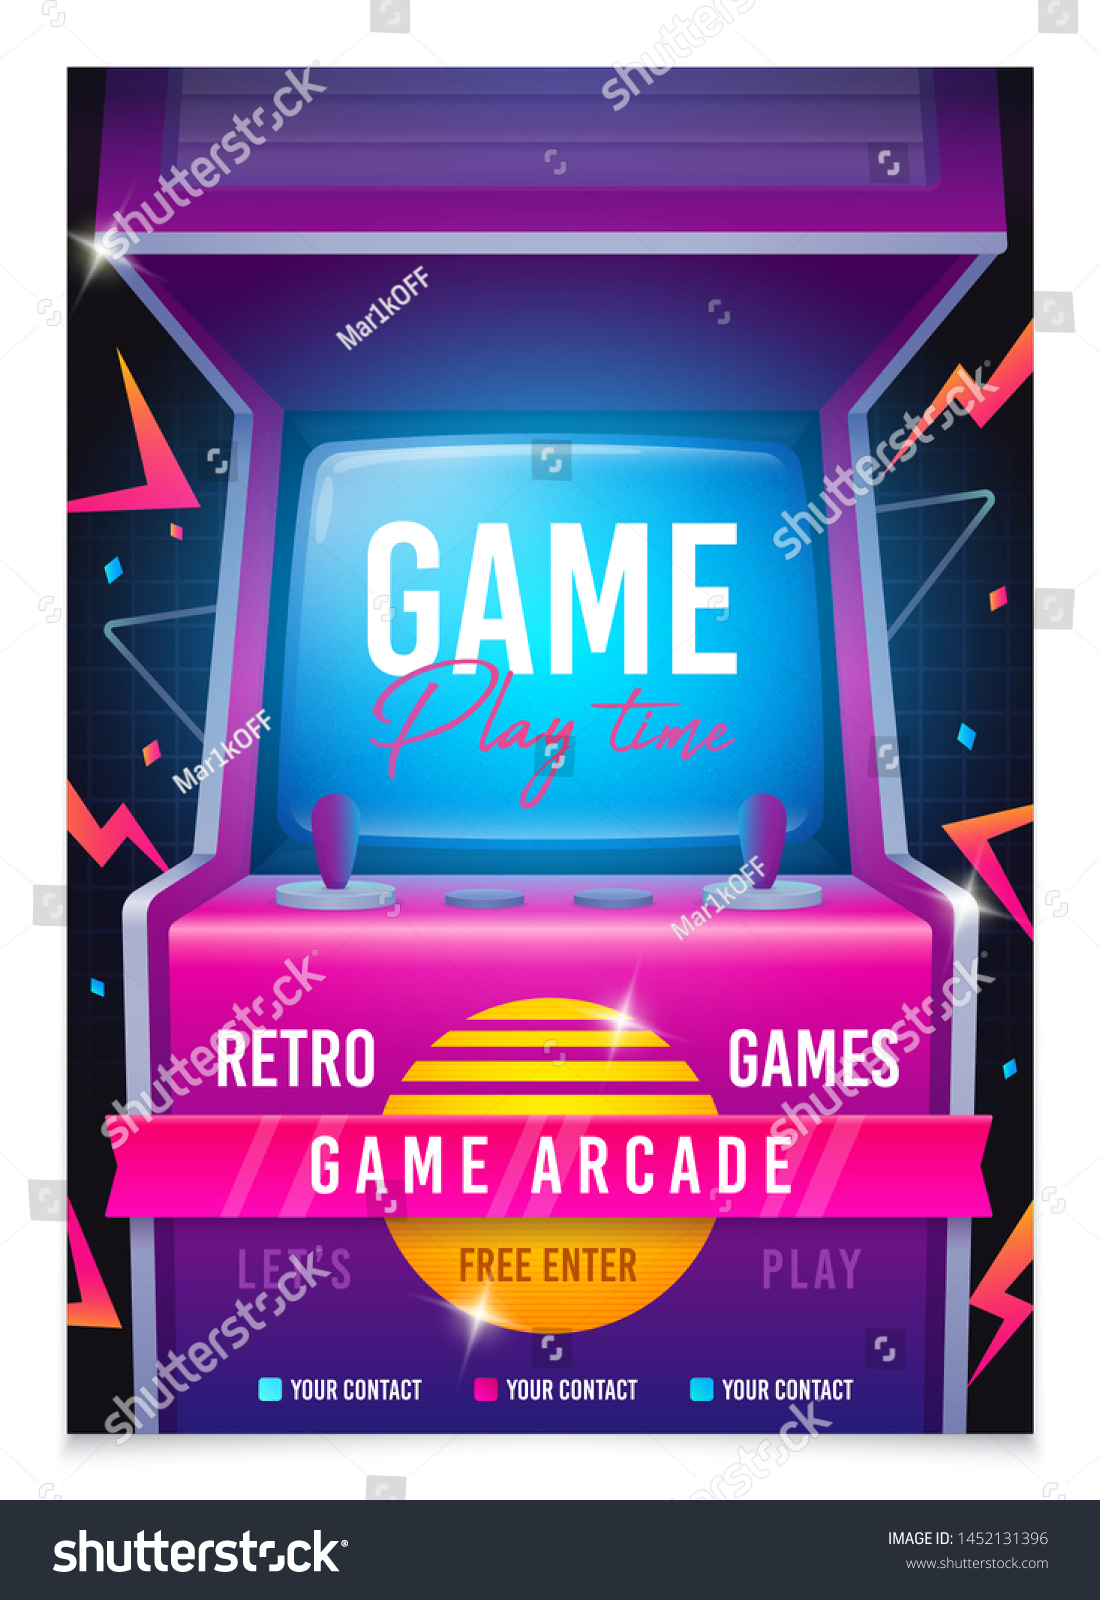 retro games free to play